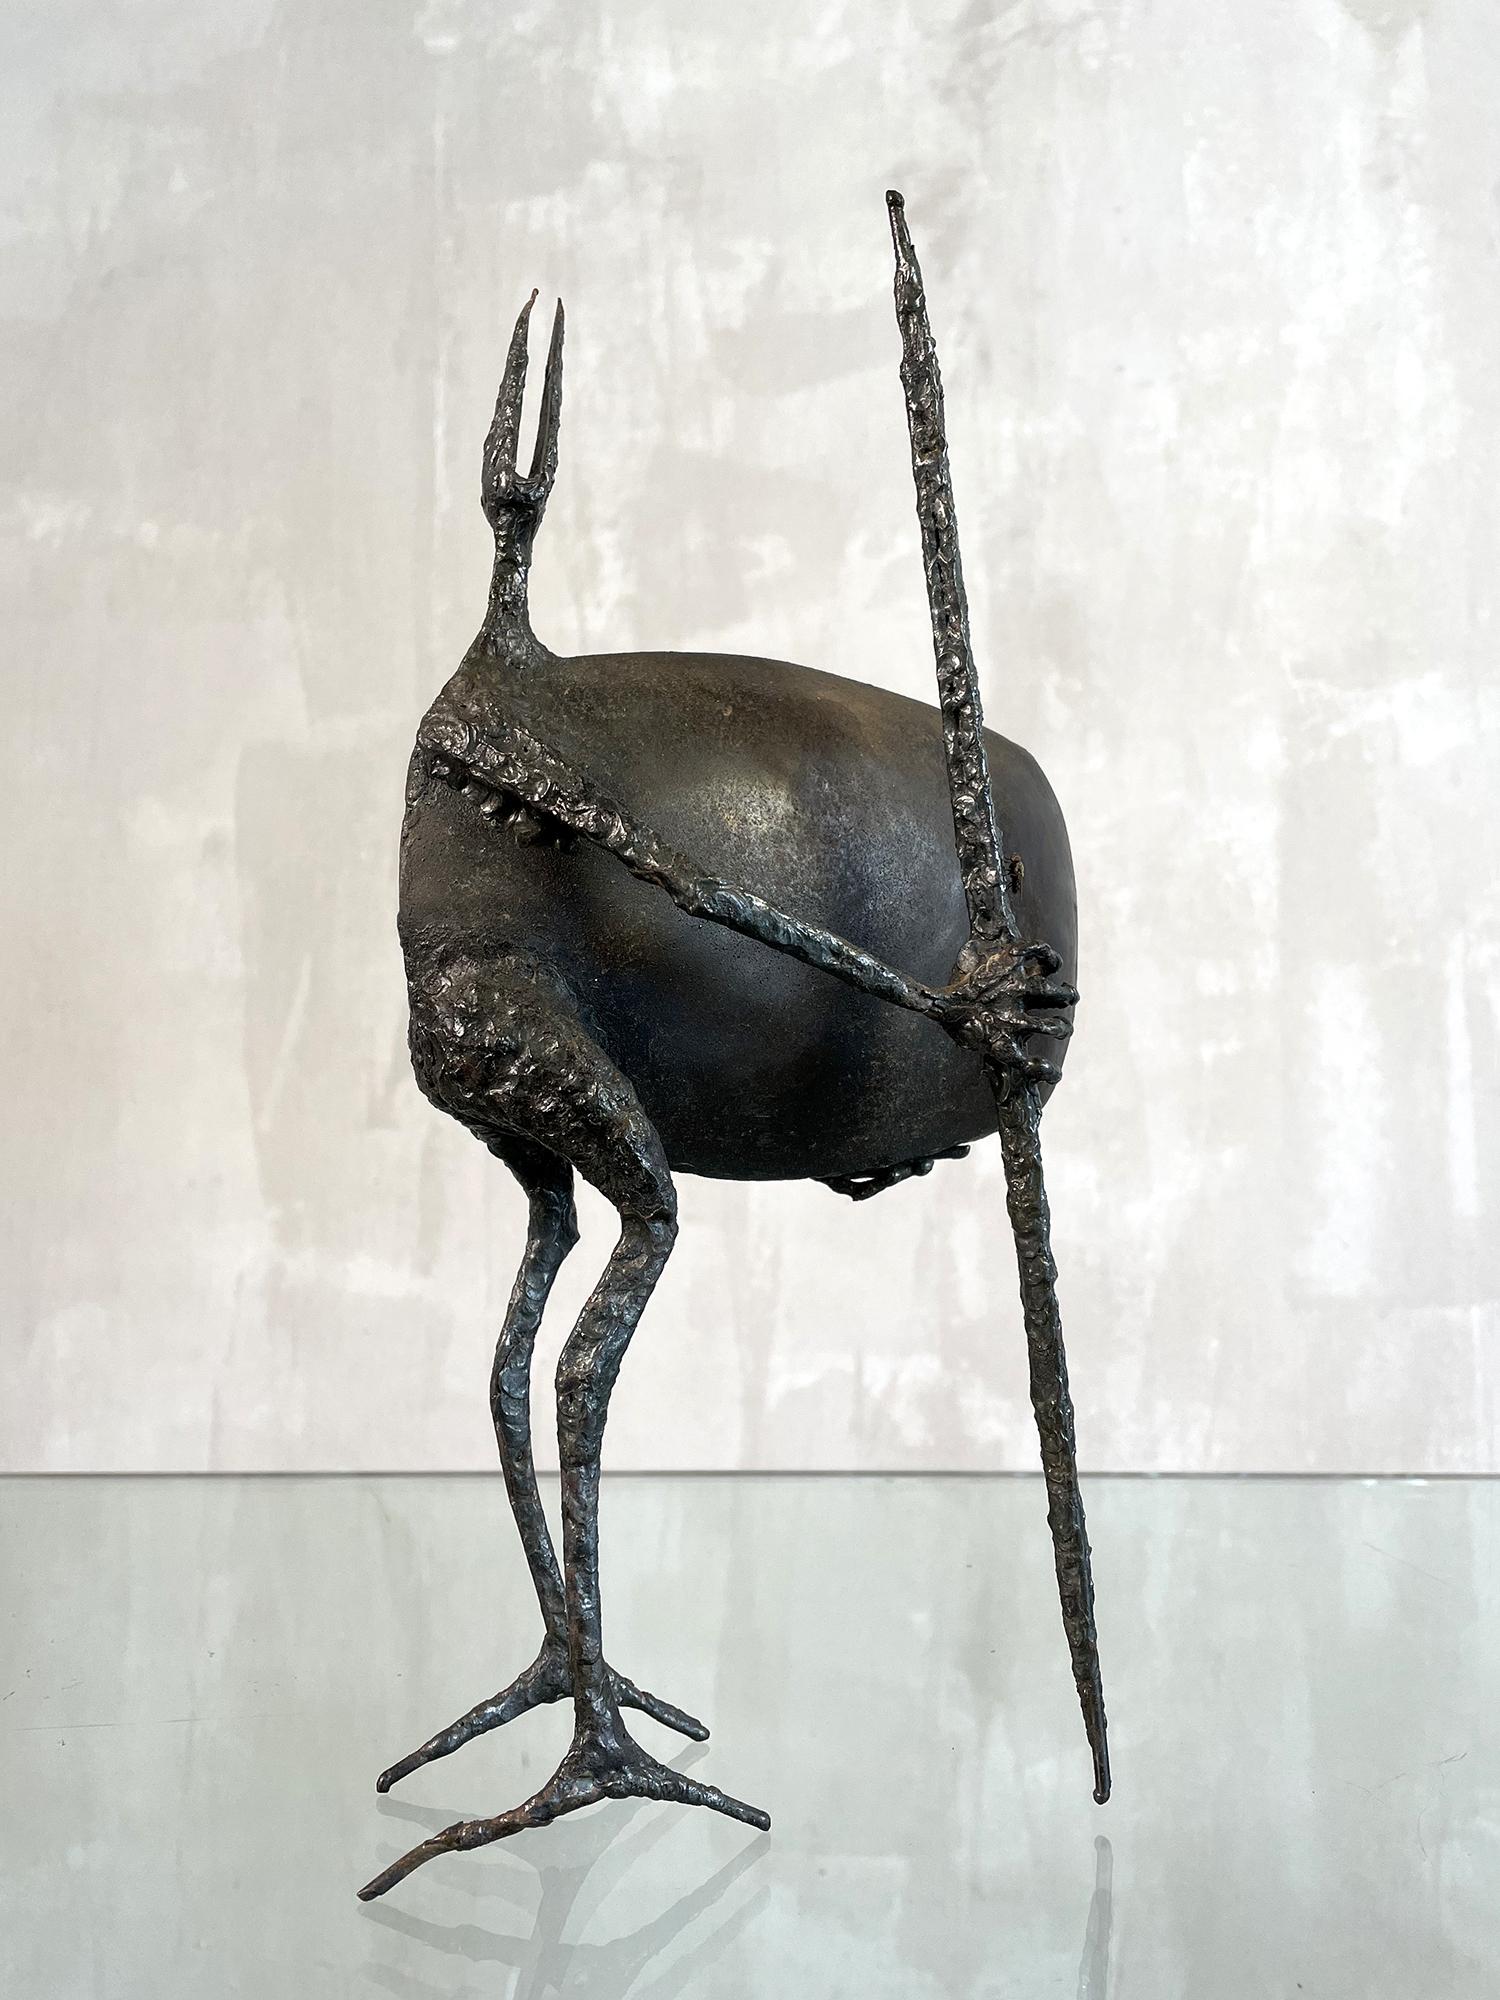 Michel Anasse, Sculpture in Welded Iron 